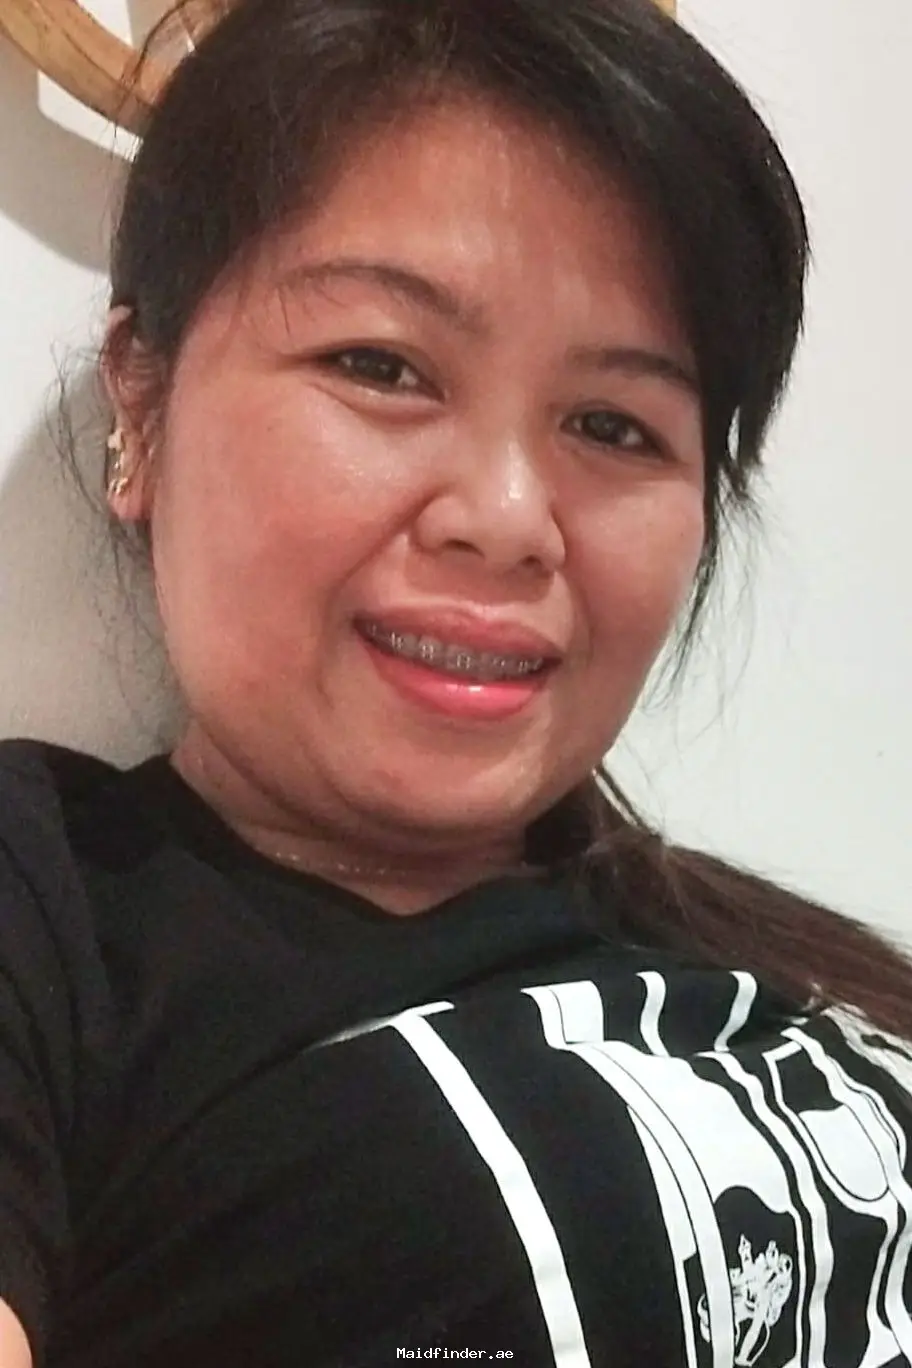 Rodalyn B FILIPINO LIVE IN NANNY DUBAI